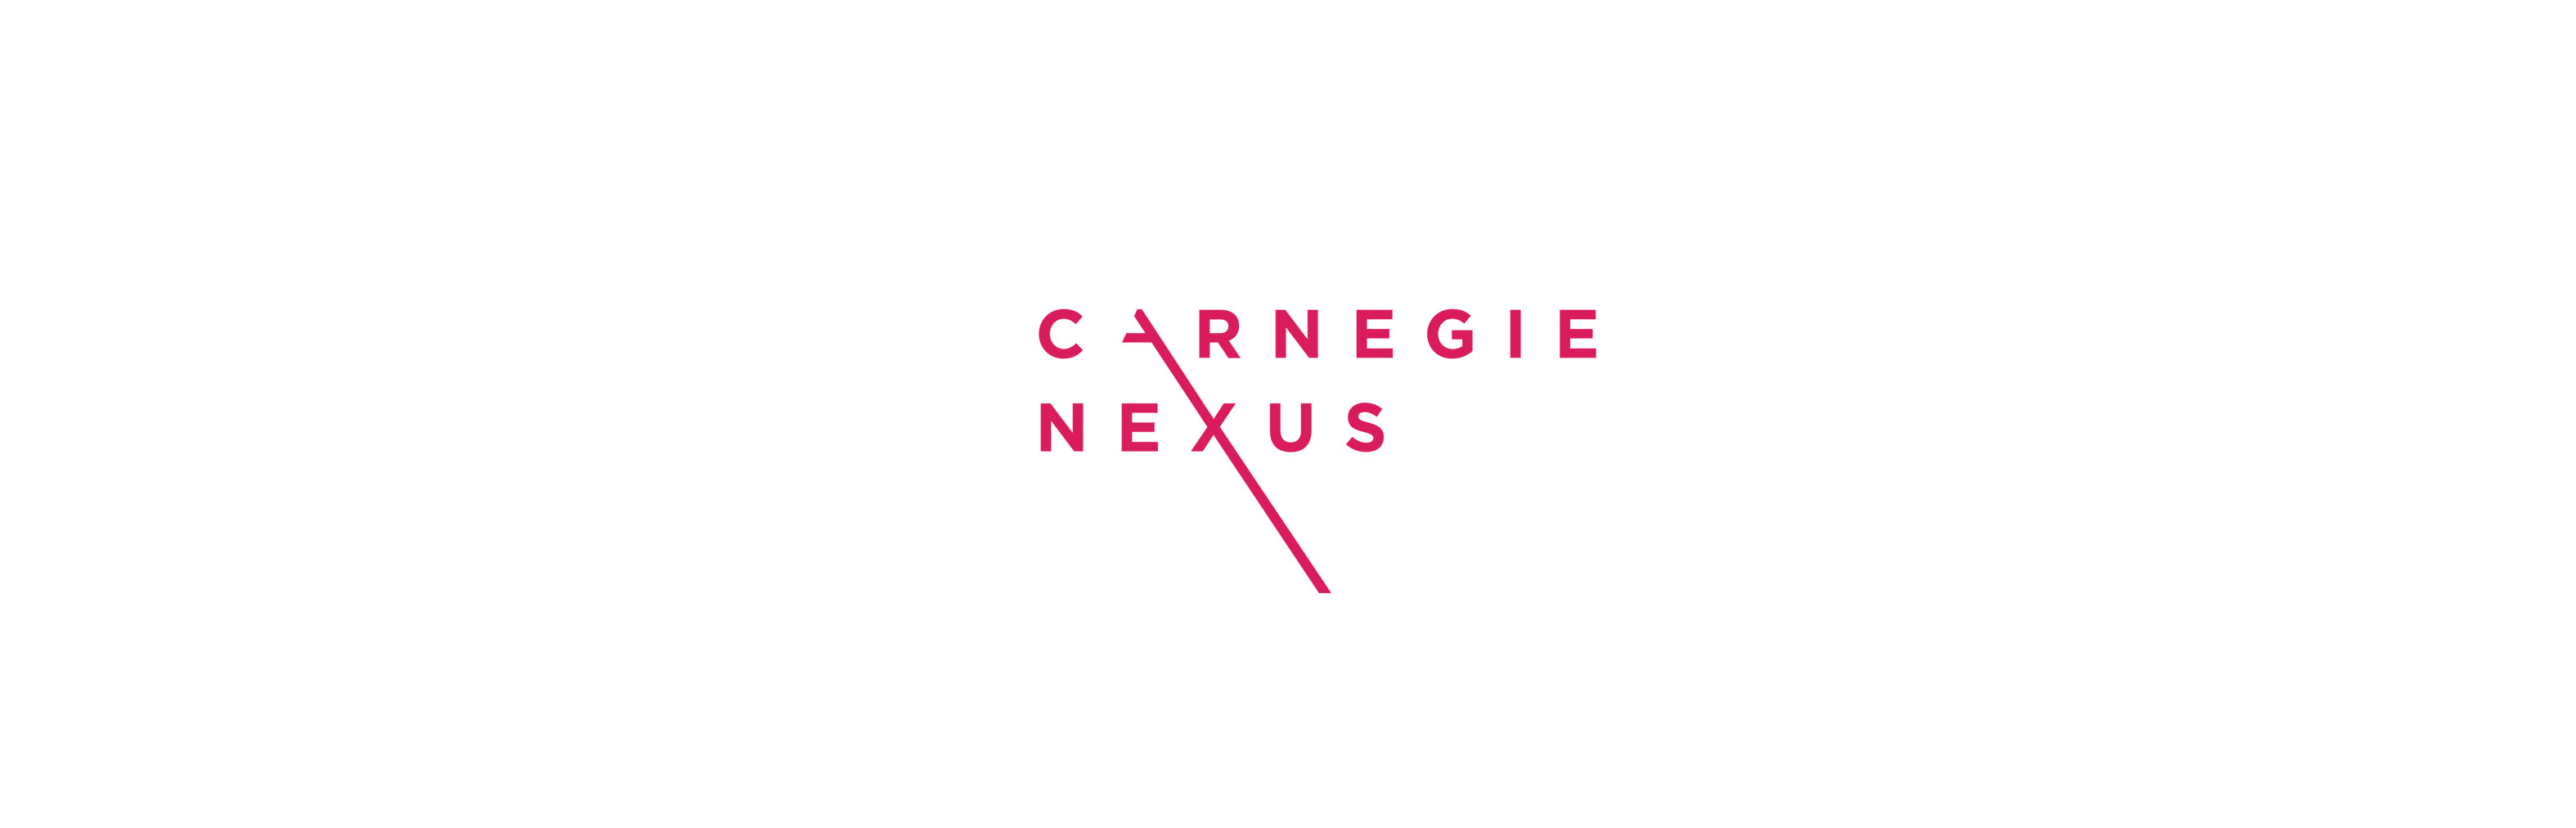 Carnegie Nexus logo